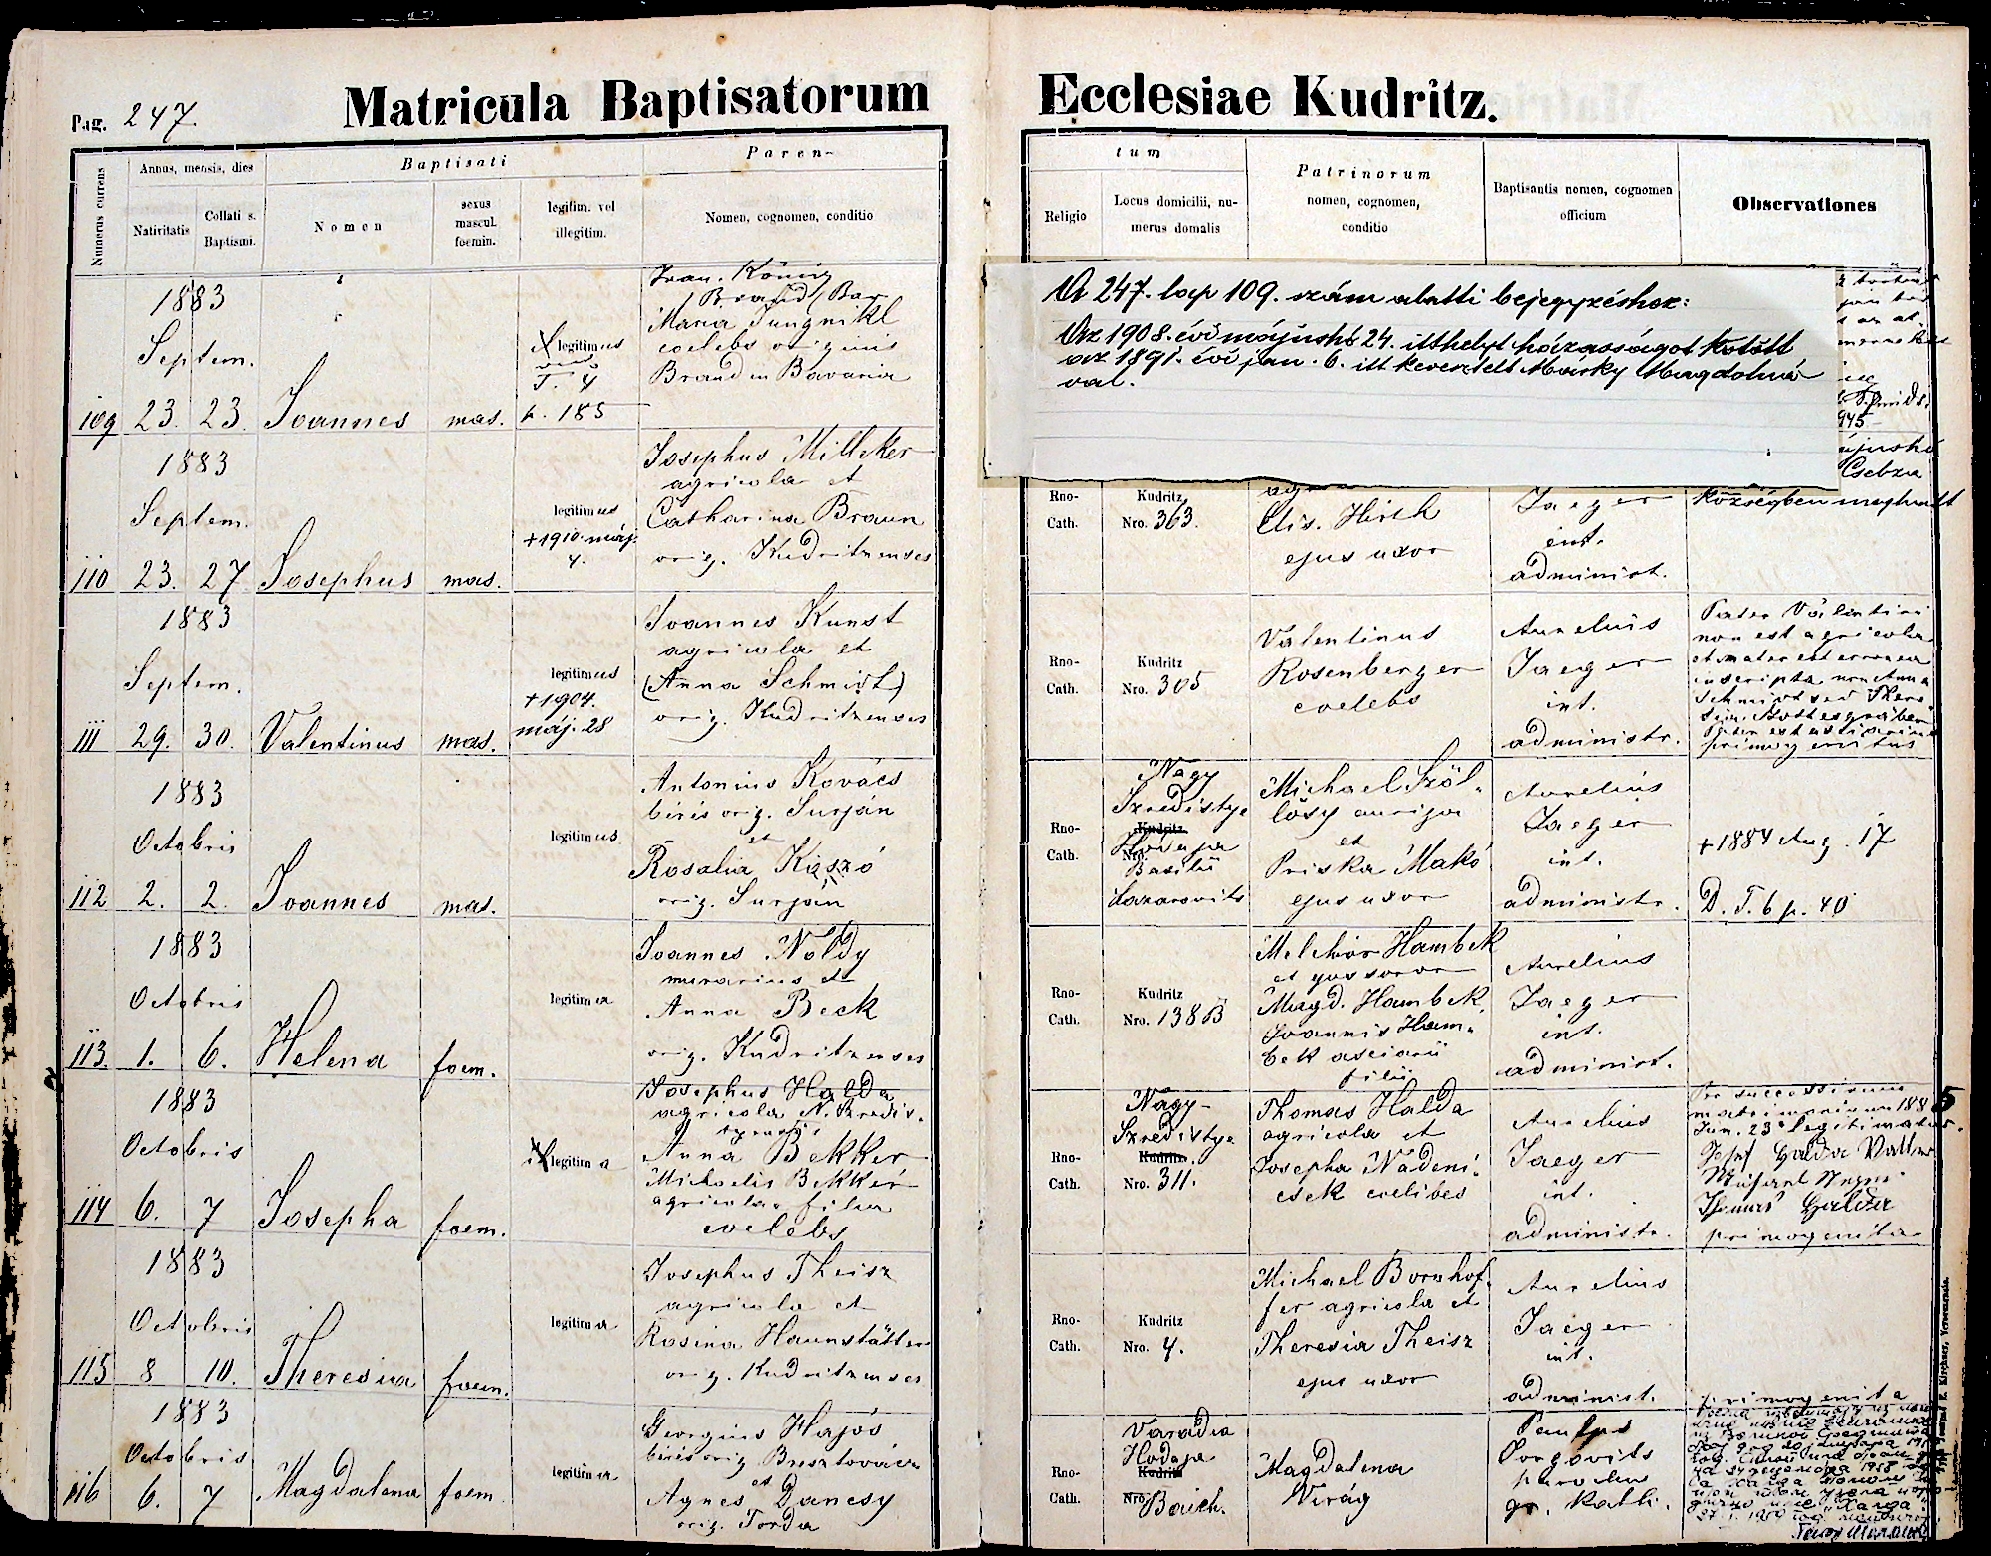 images/church_records/BIRTHS/1880-1883B/1883/247